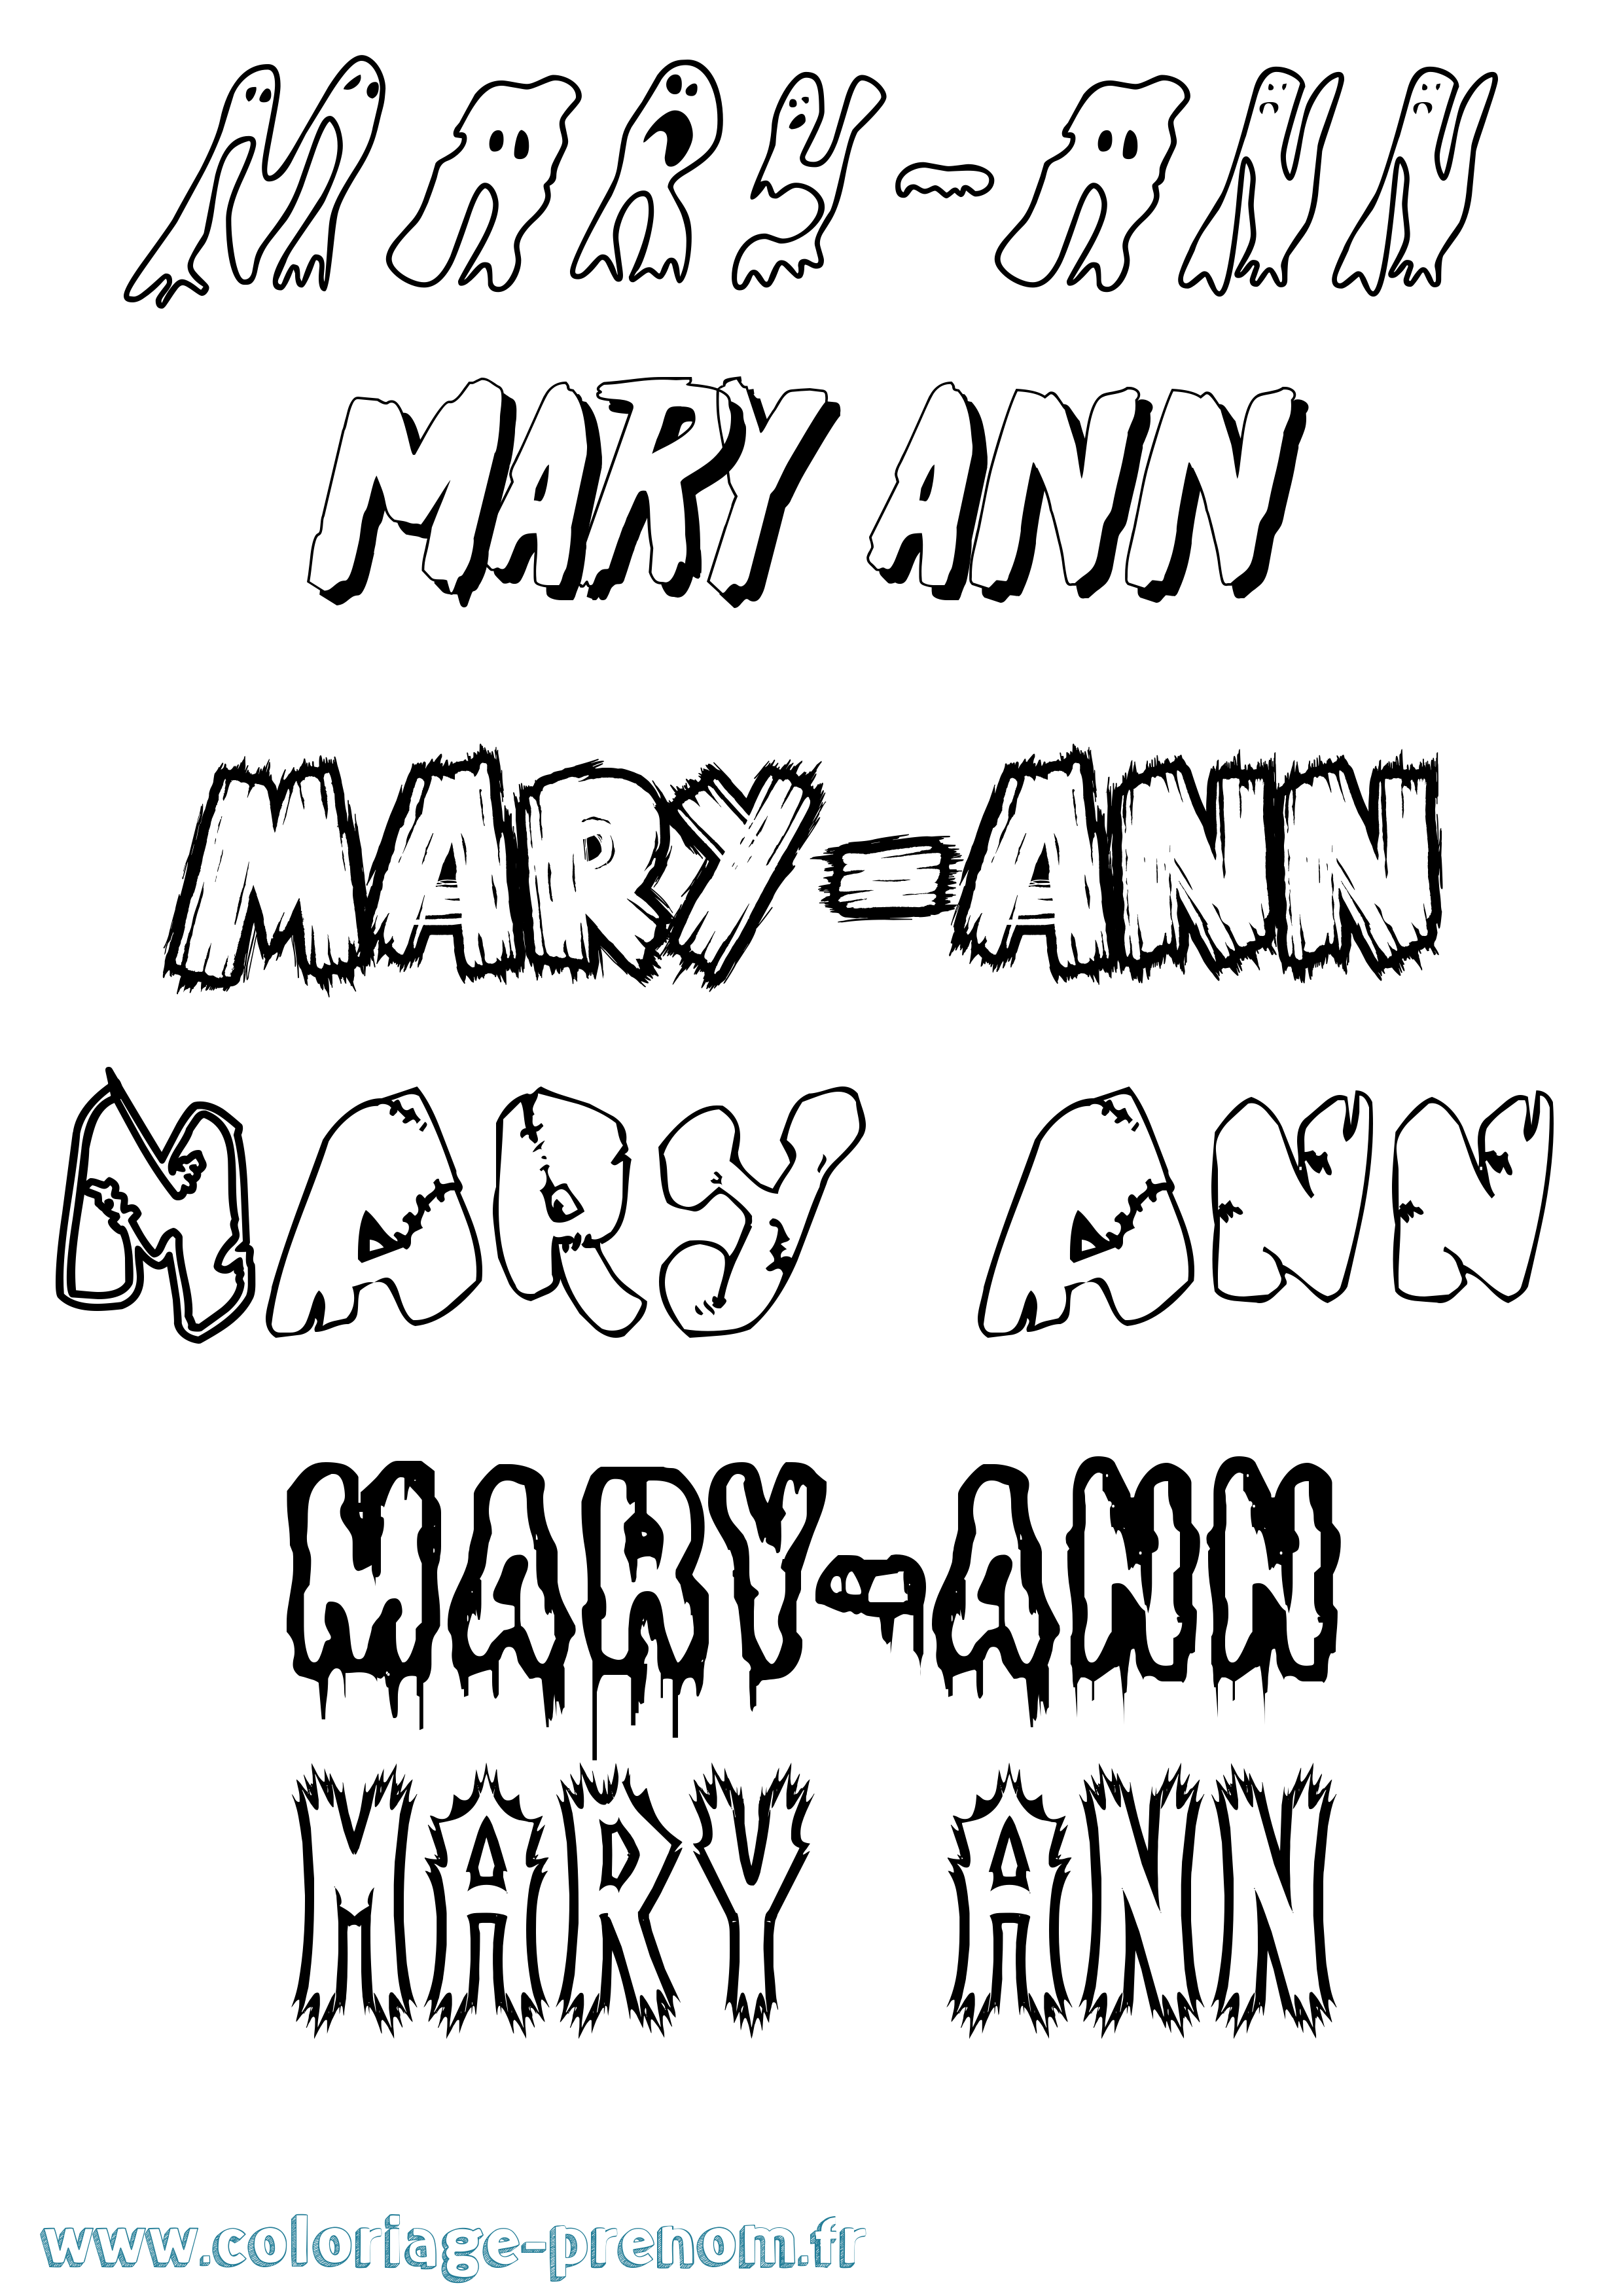 Coloriage prénom Mary-Ann Frisson